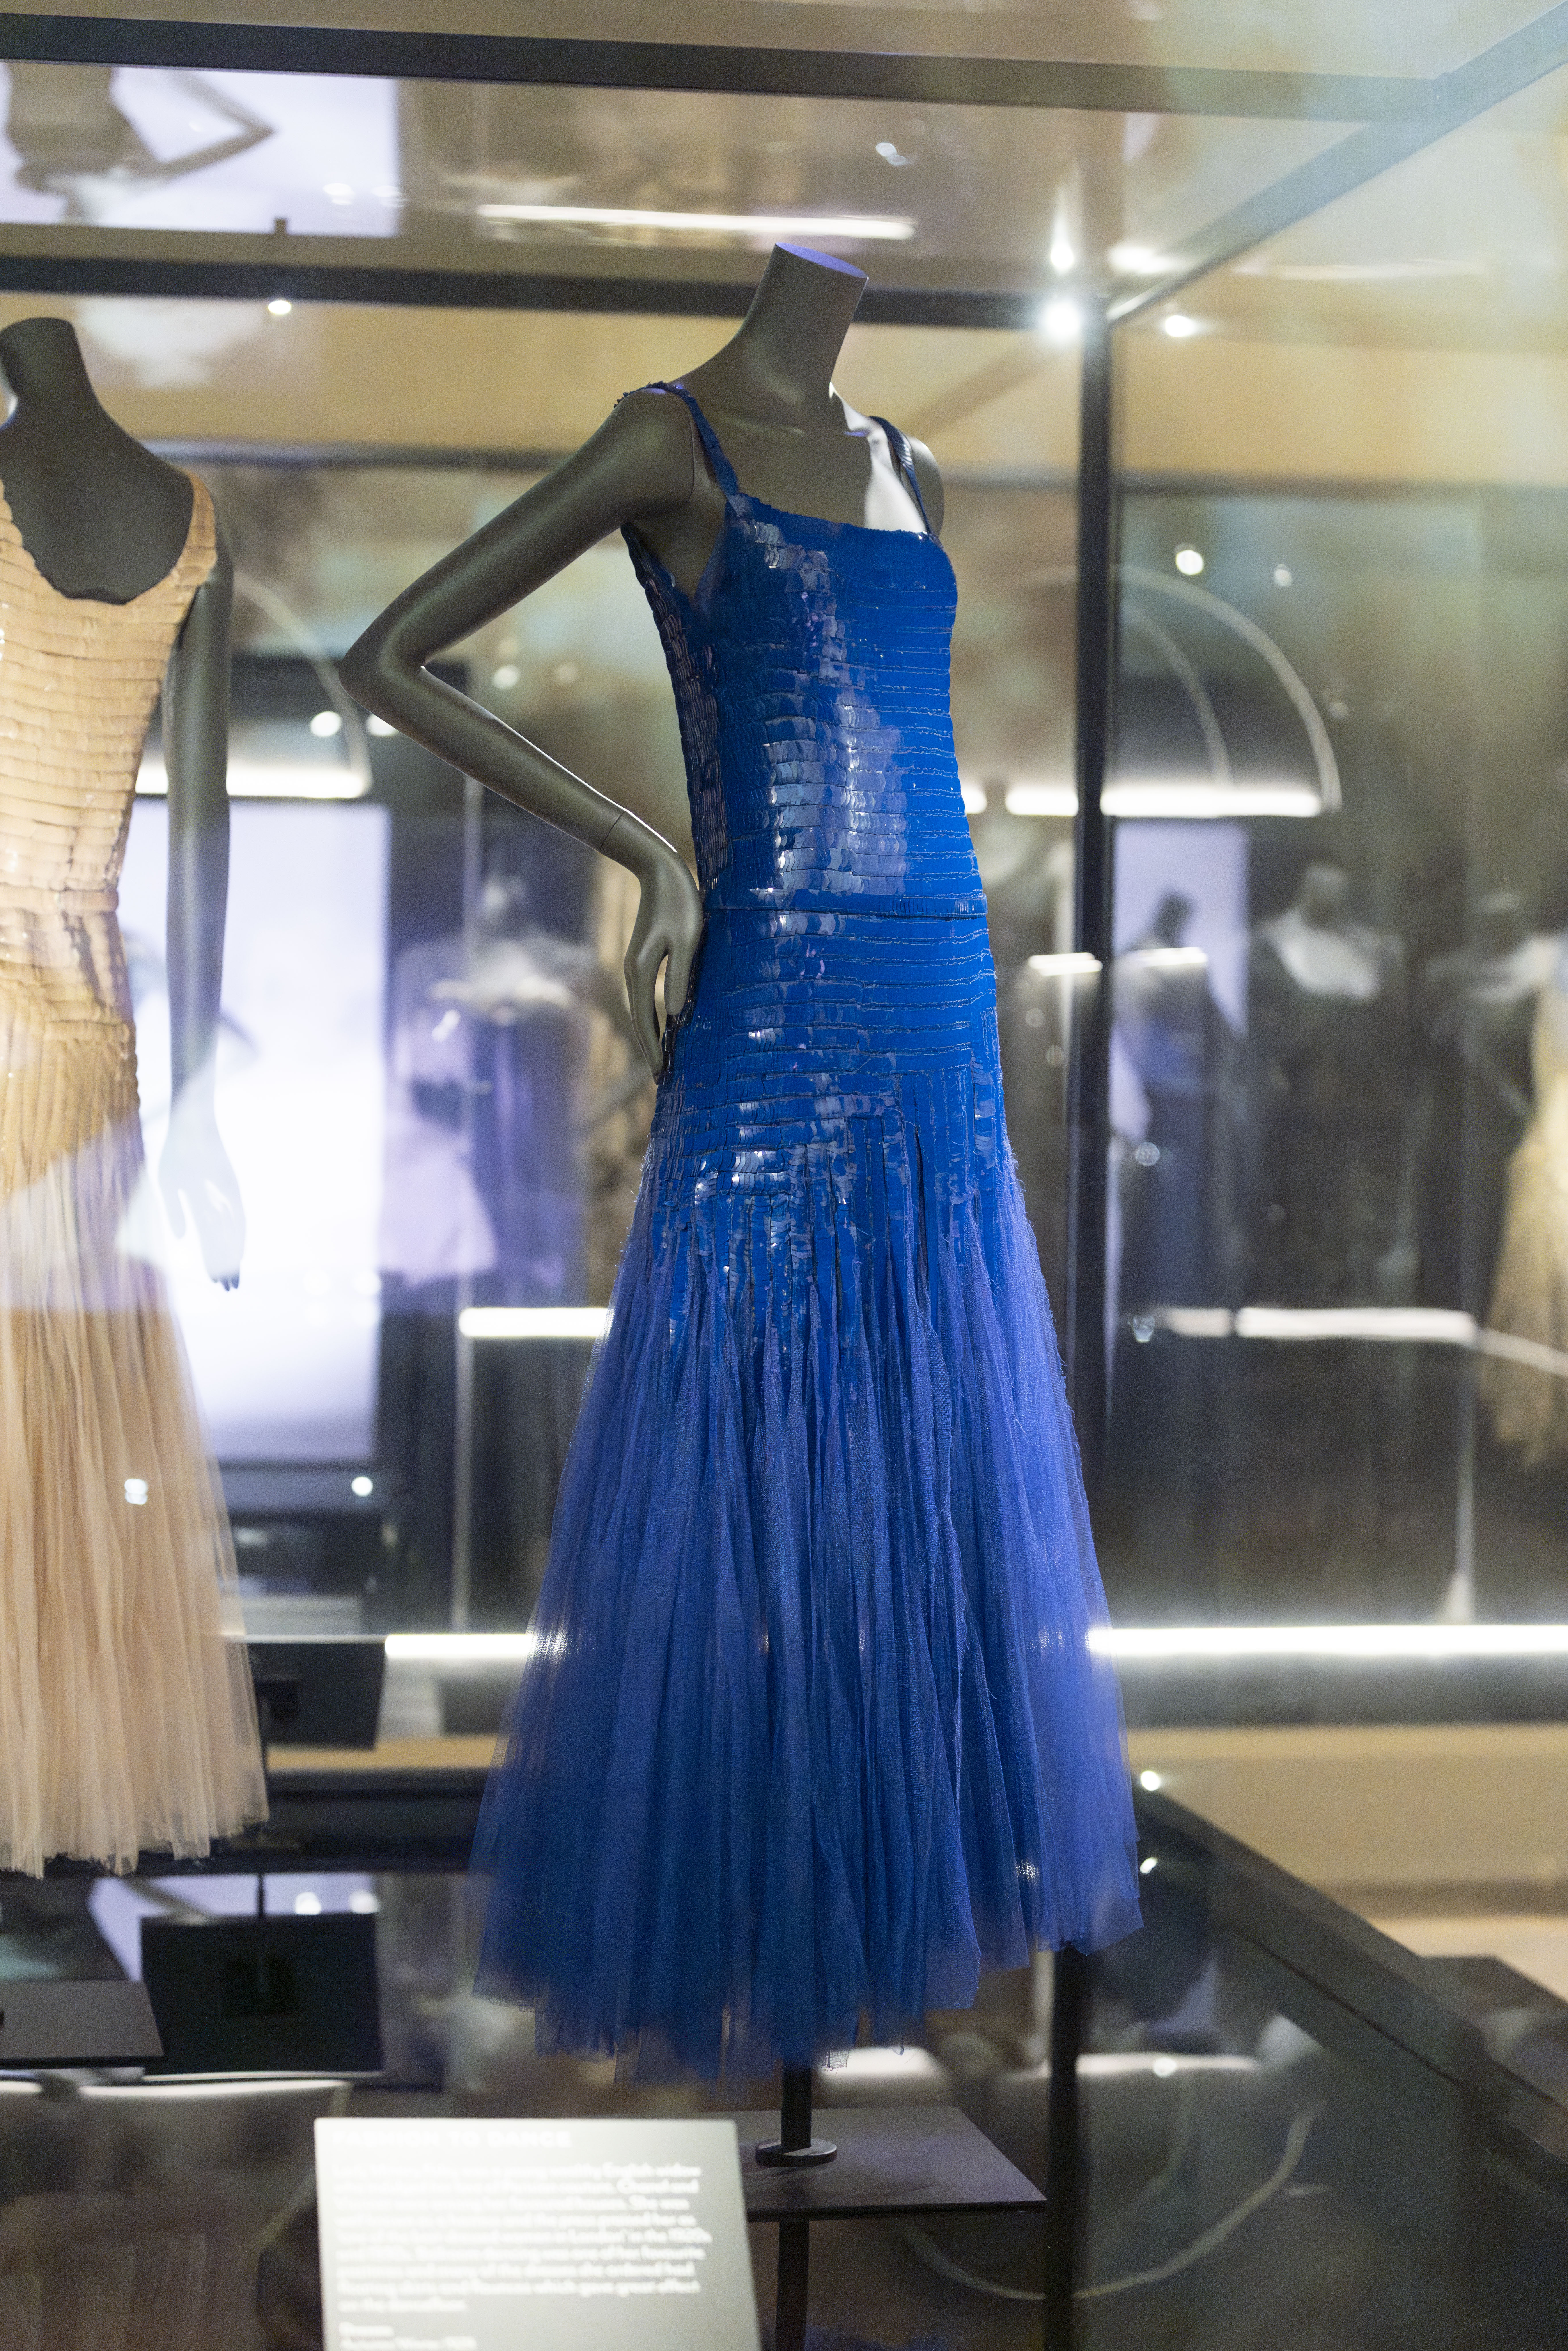 Gabrielle 'Coco' Chanel was the first superstar fashion designer